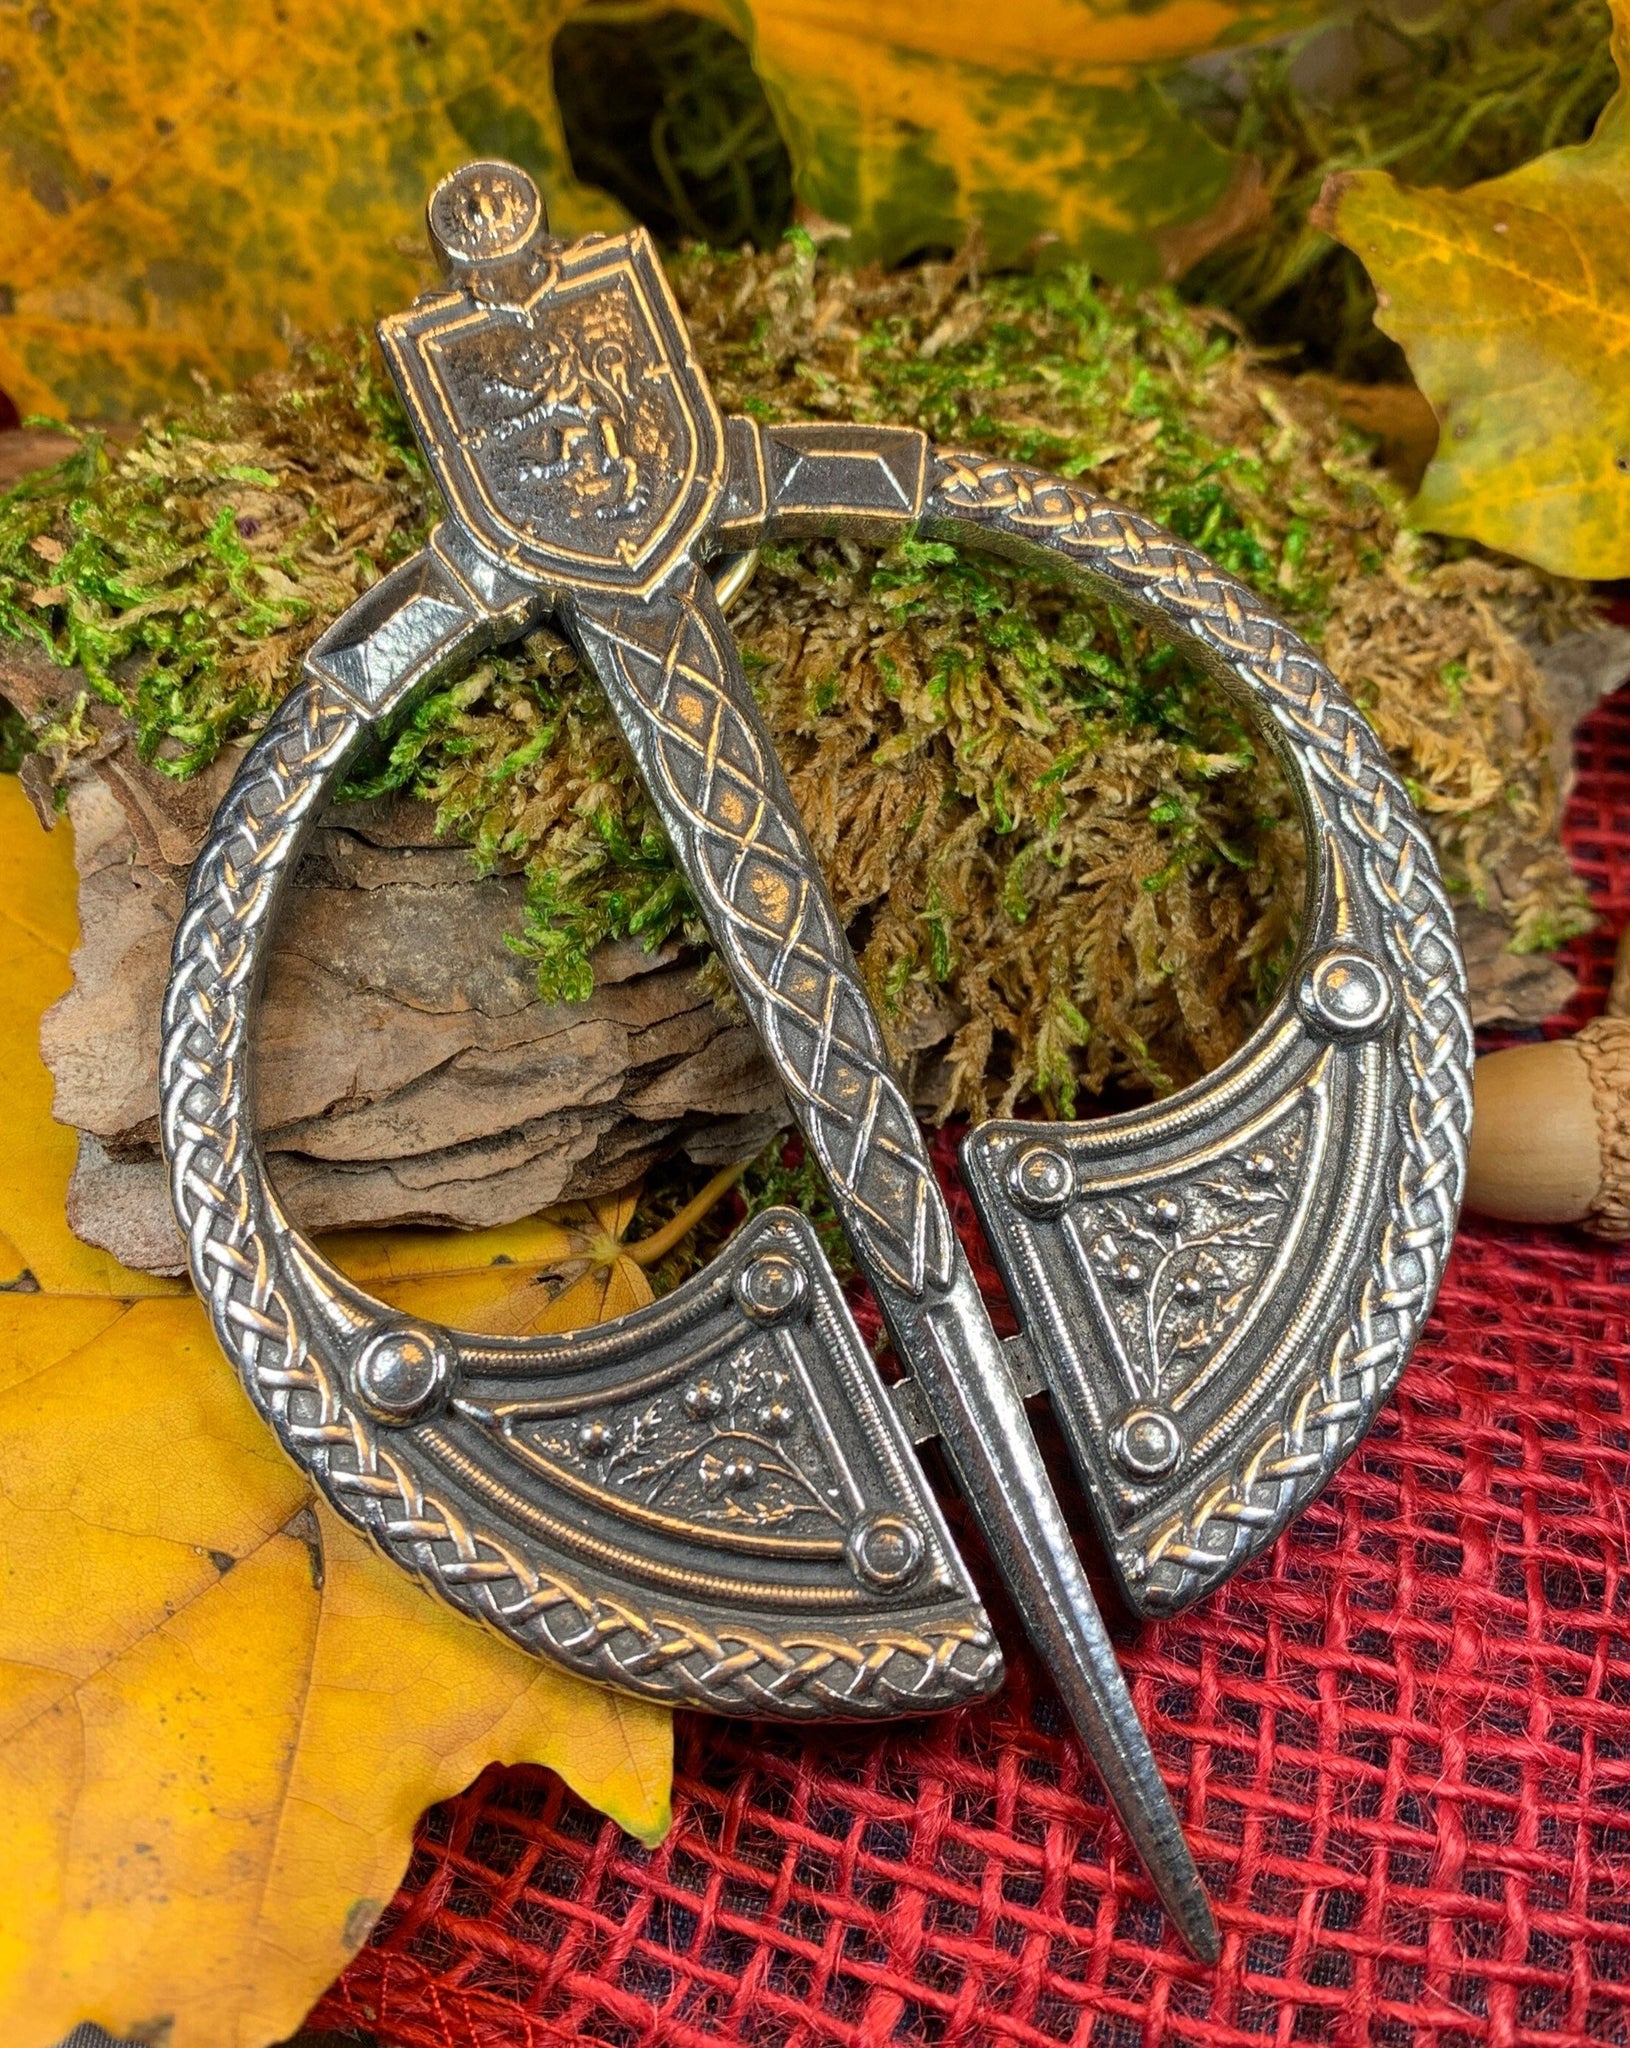 The Celtic Croft Gold Dragon Eye Kilt Pin/Brooch